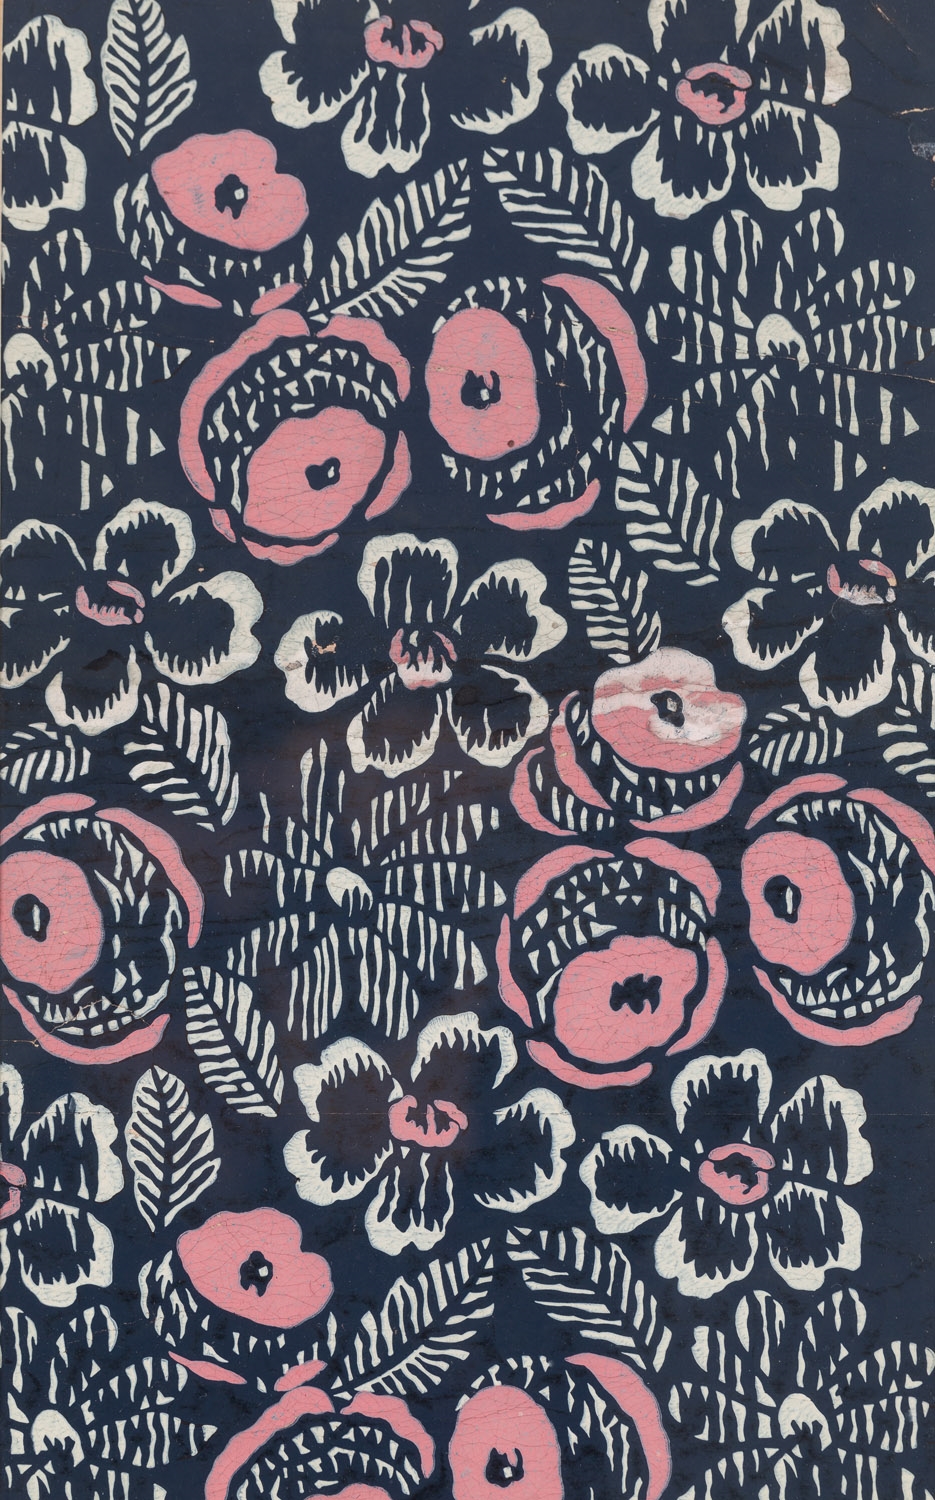 Floral Fabric / Textile Print UK Designer